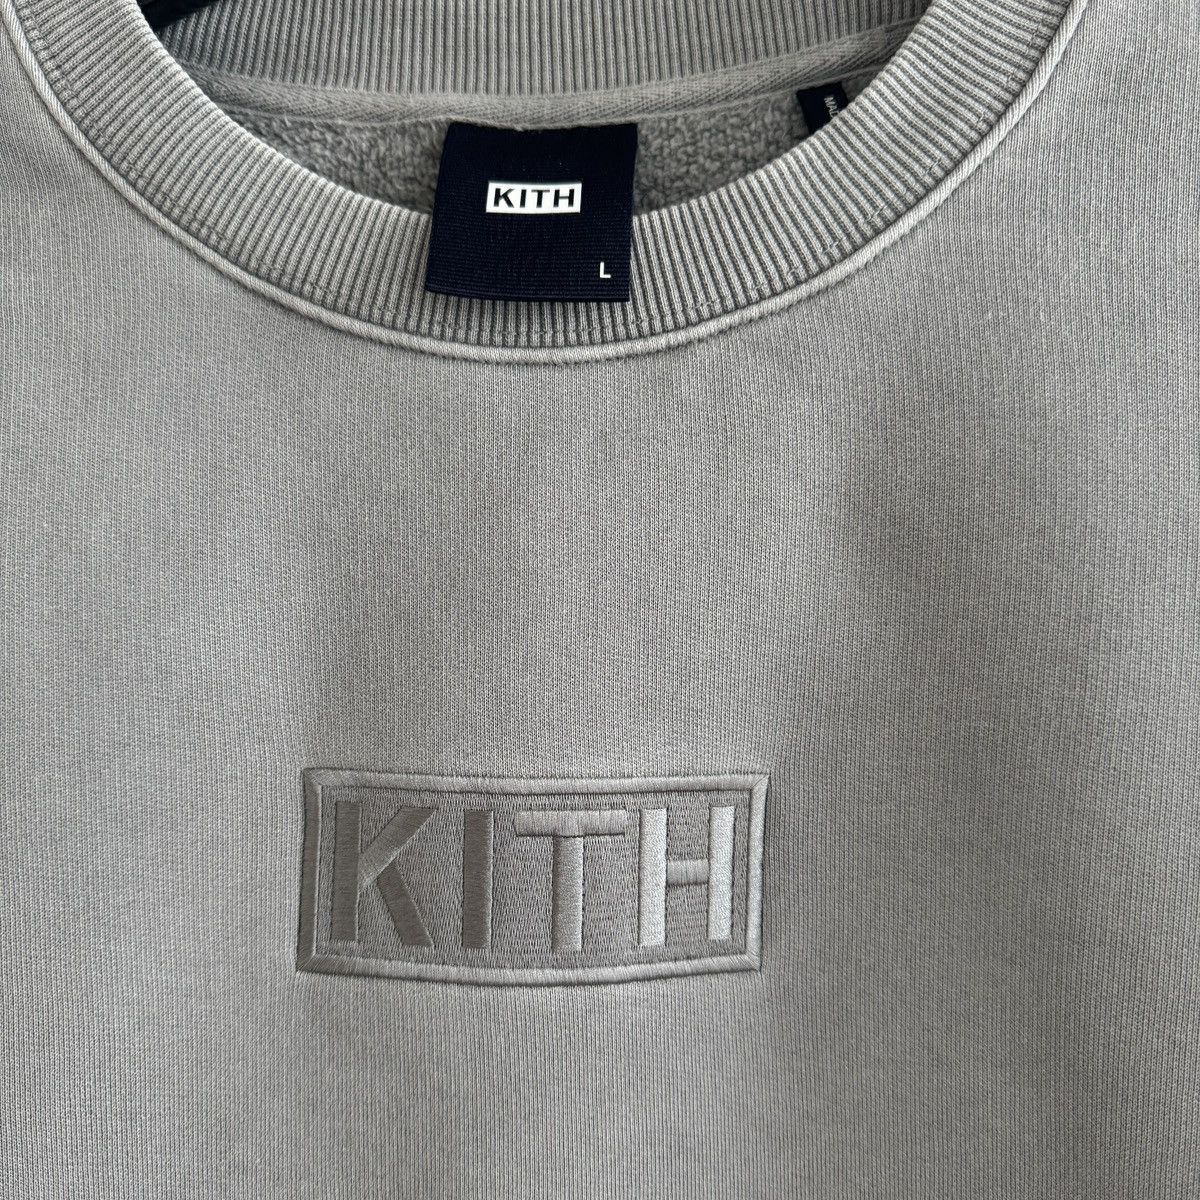 Kith Kith Cyber Monday Crewneck Sweatshirt FW22 | Grailed